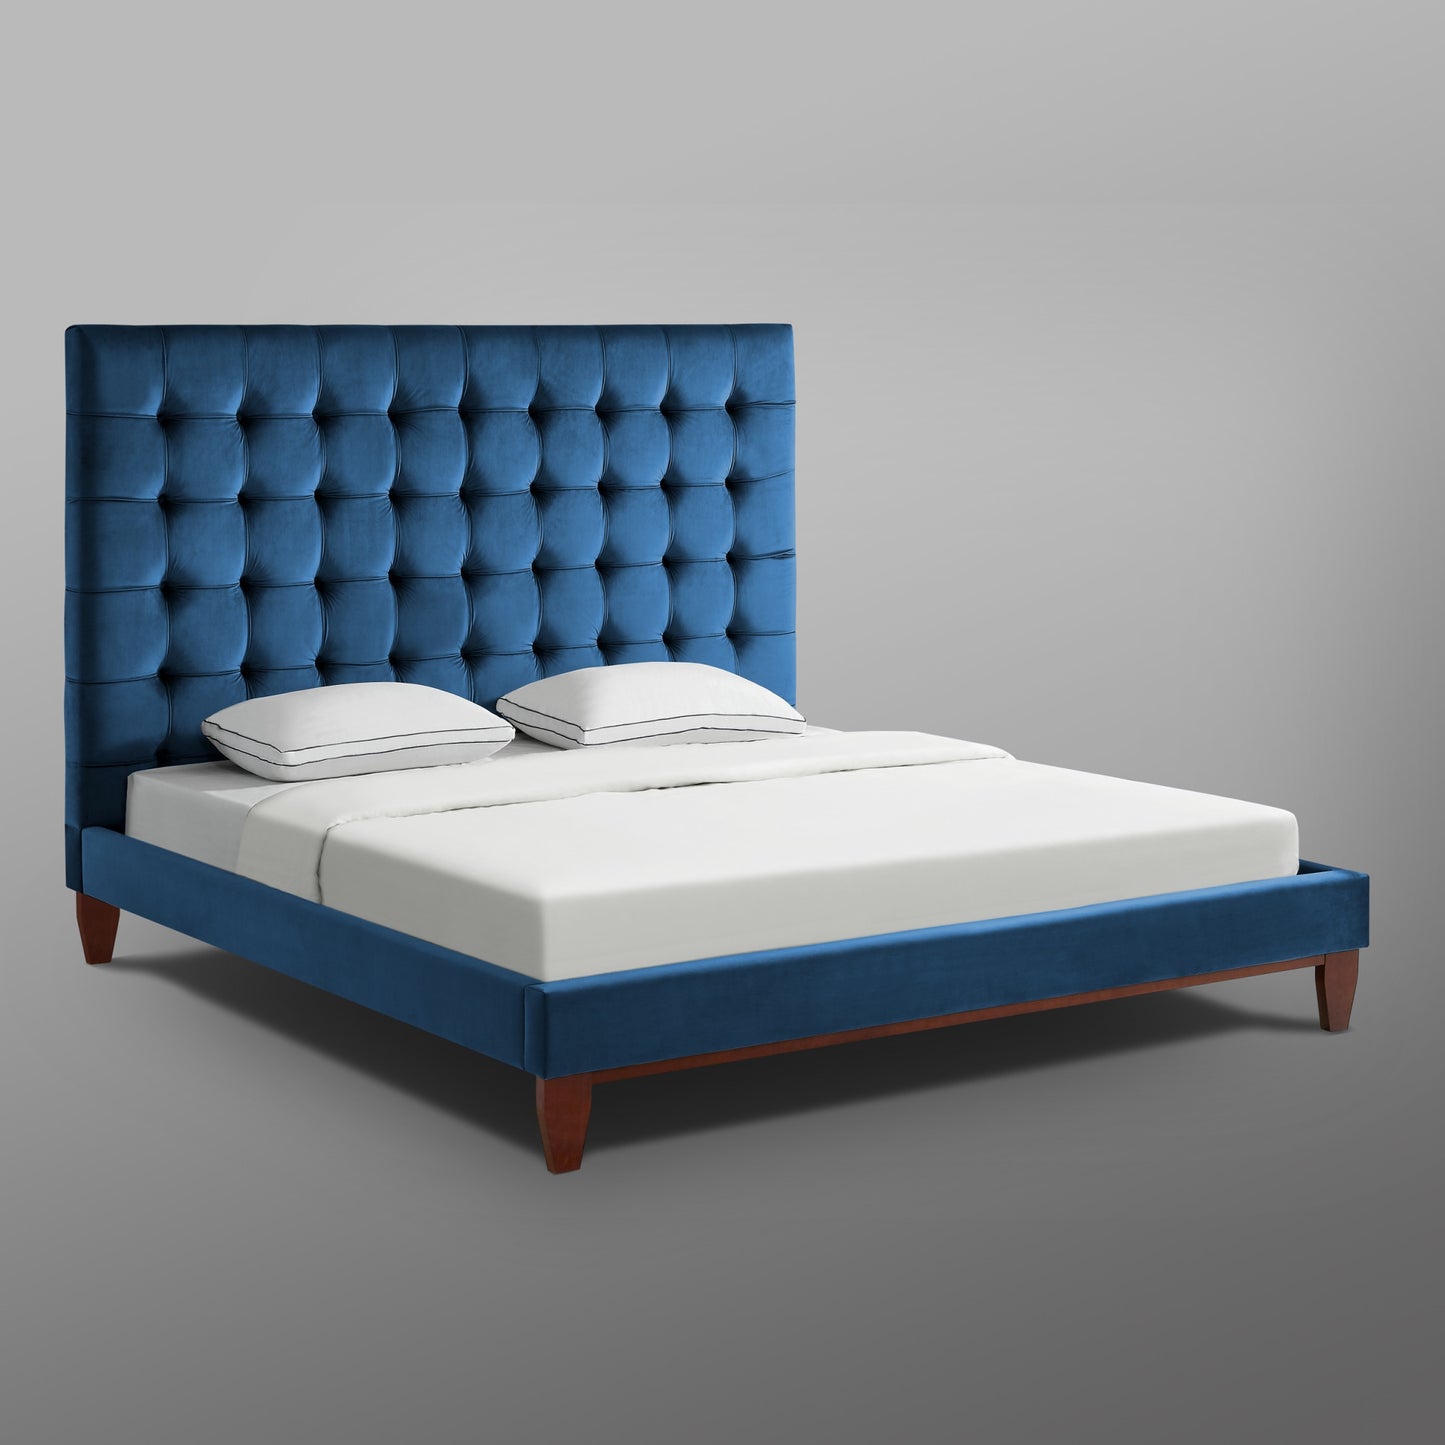 Navy Blue Solid Wood King Tufted Upholstered Velvet Bed